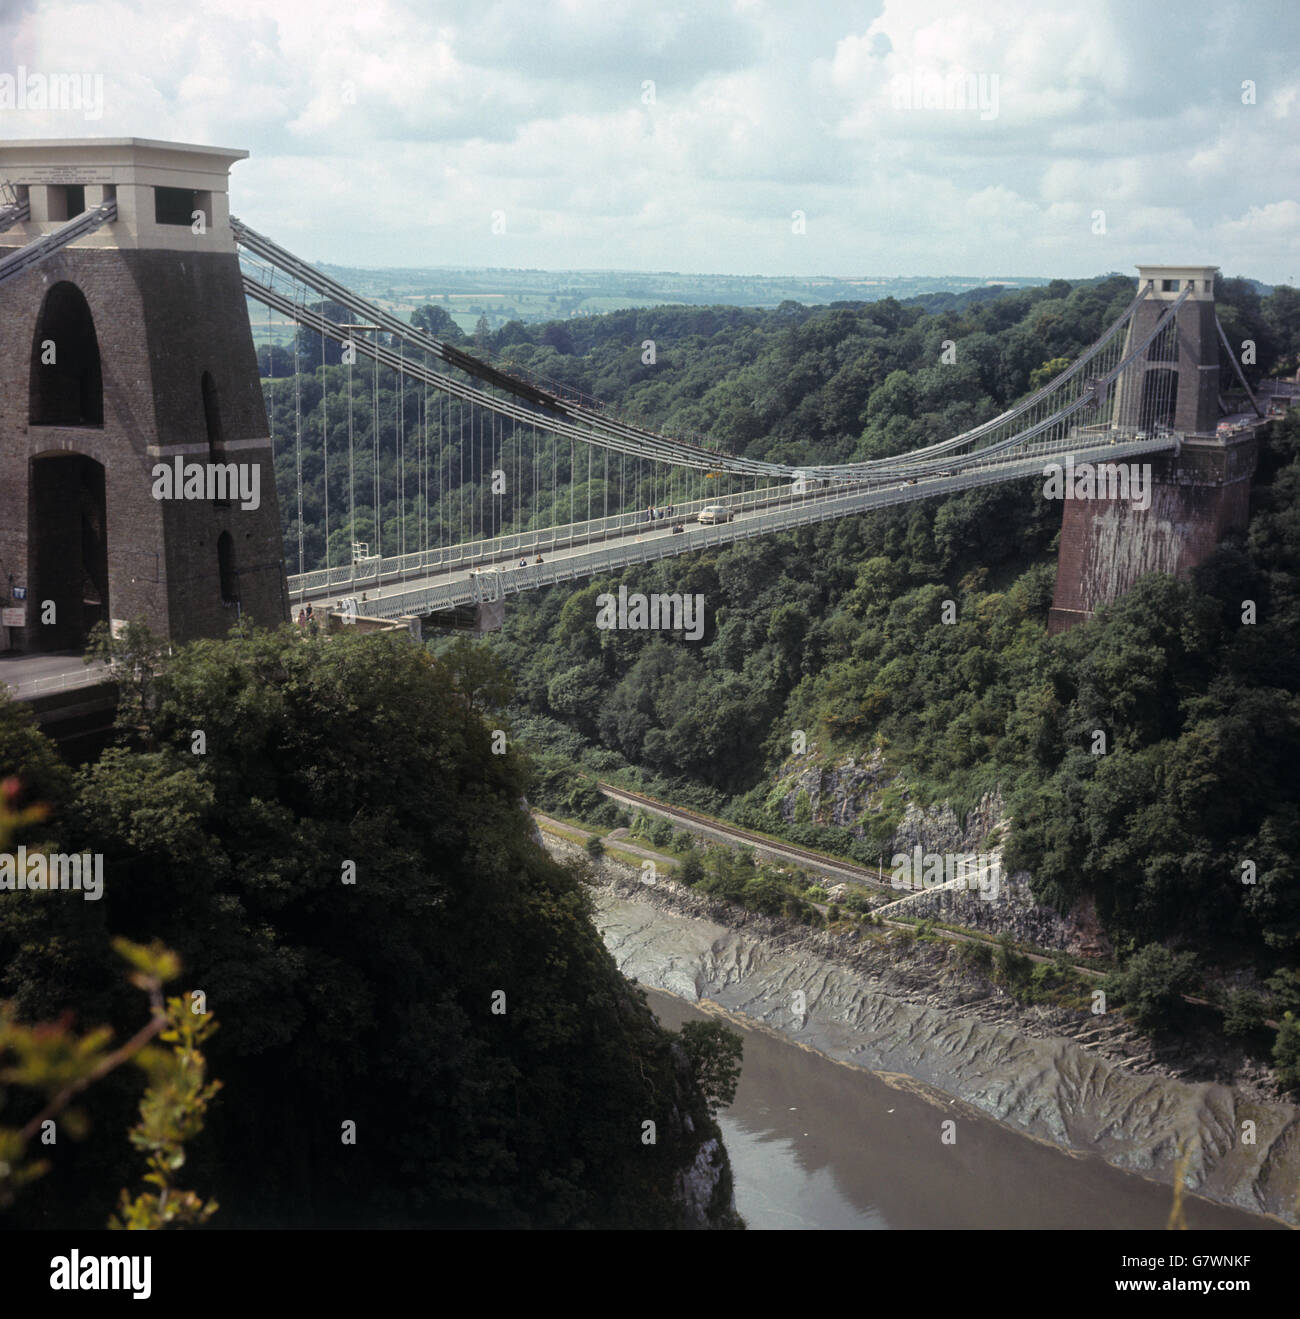 Buildings and Landmarks - Clifton Suspension Bridge - Bristol. Image of the 245ft high Clifton Suspension bridge over the Avon Gorge near Bristol. Stock Photo